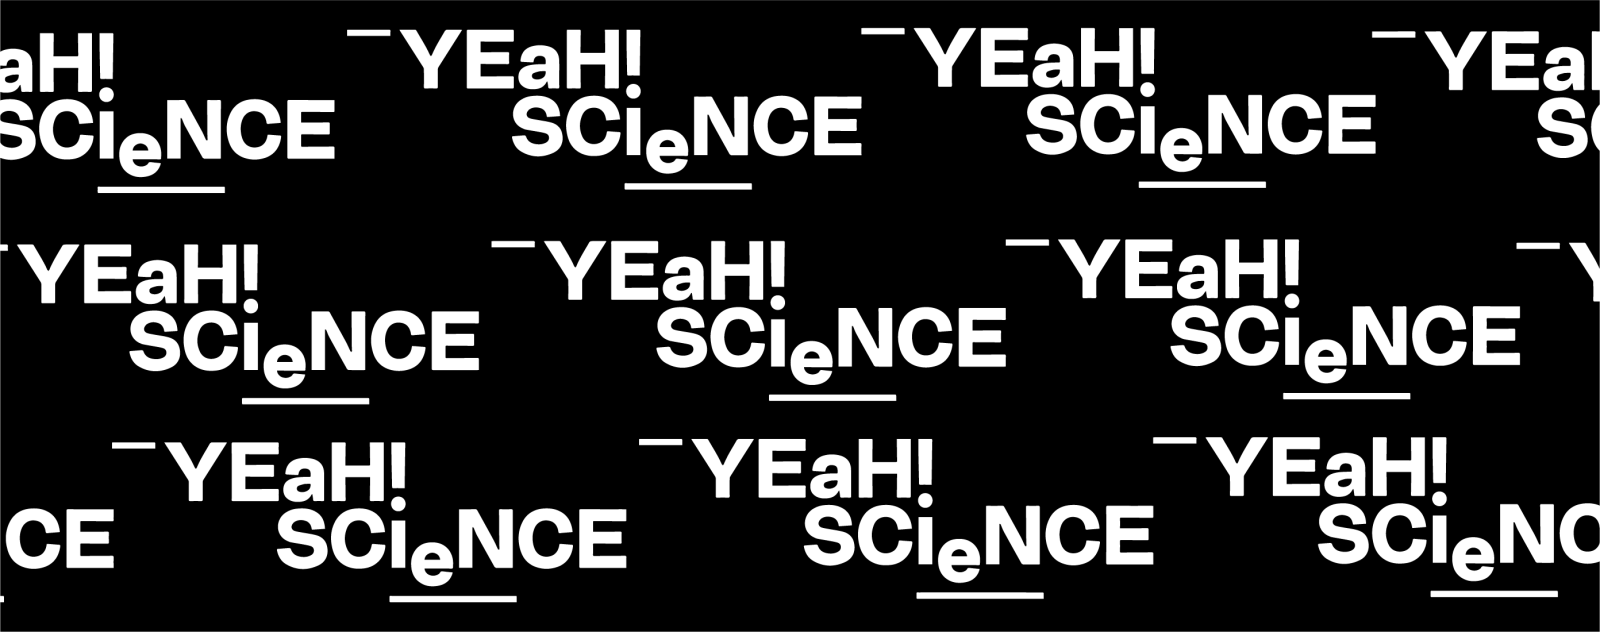 yeah science wallpaper